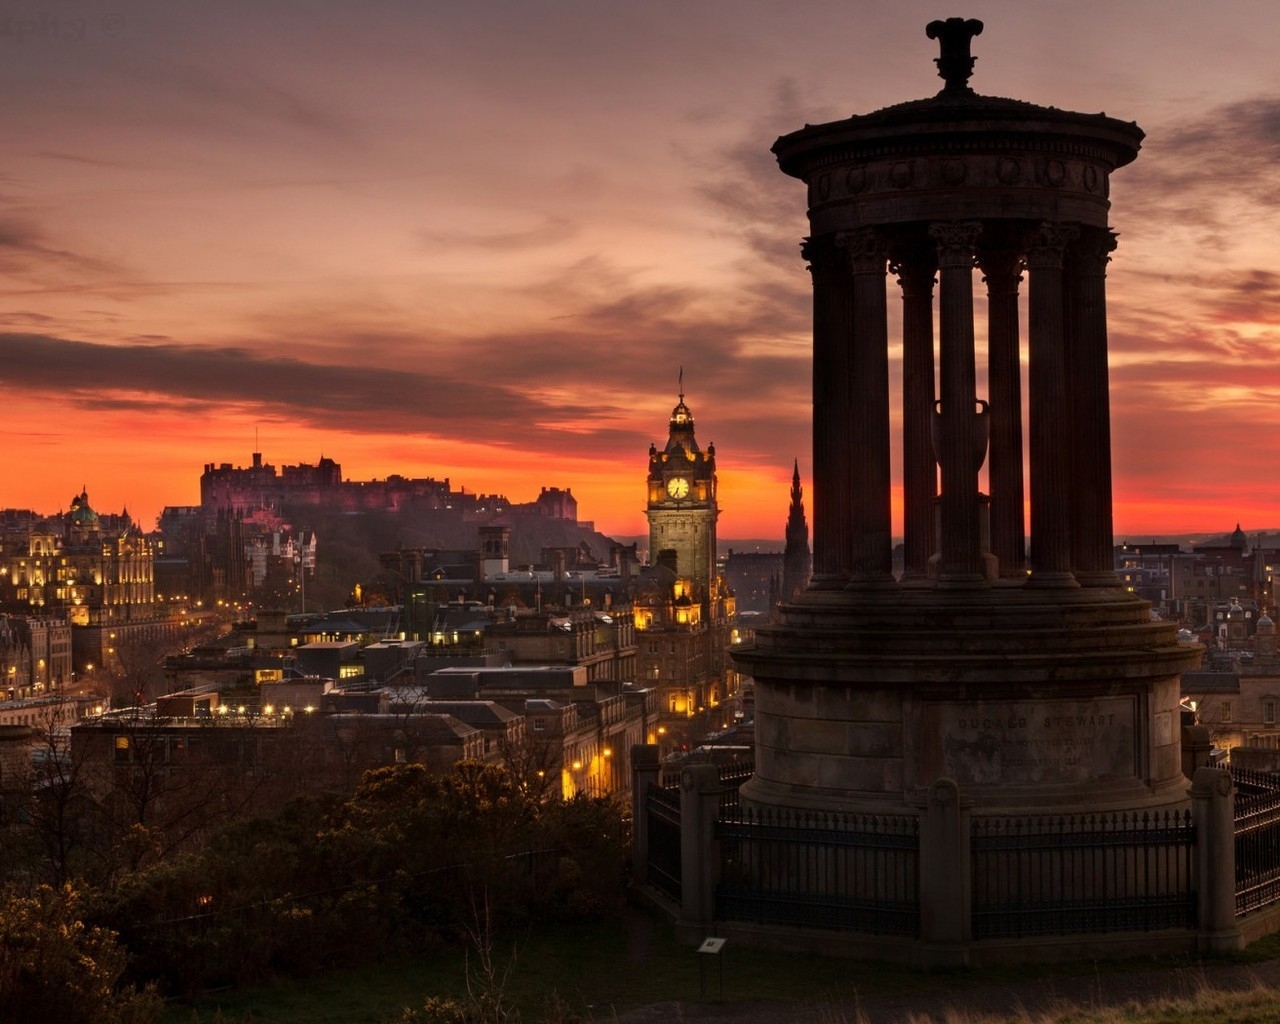 Edinburgh Scotland for 1280 x 1024 resolution